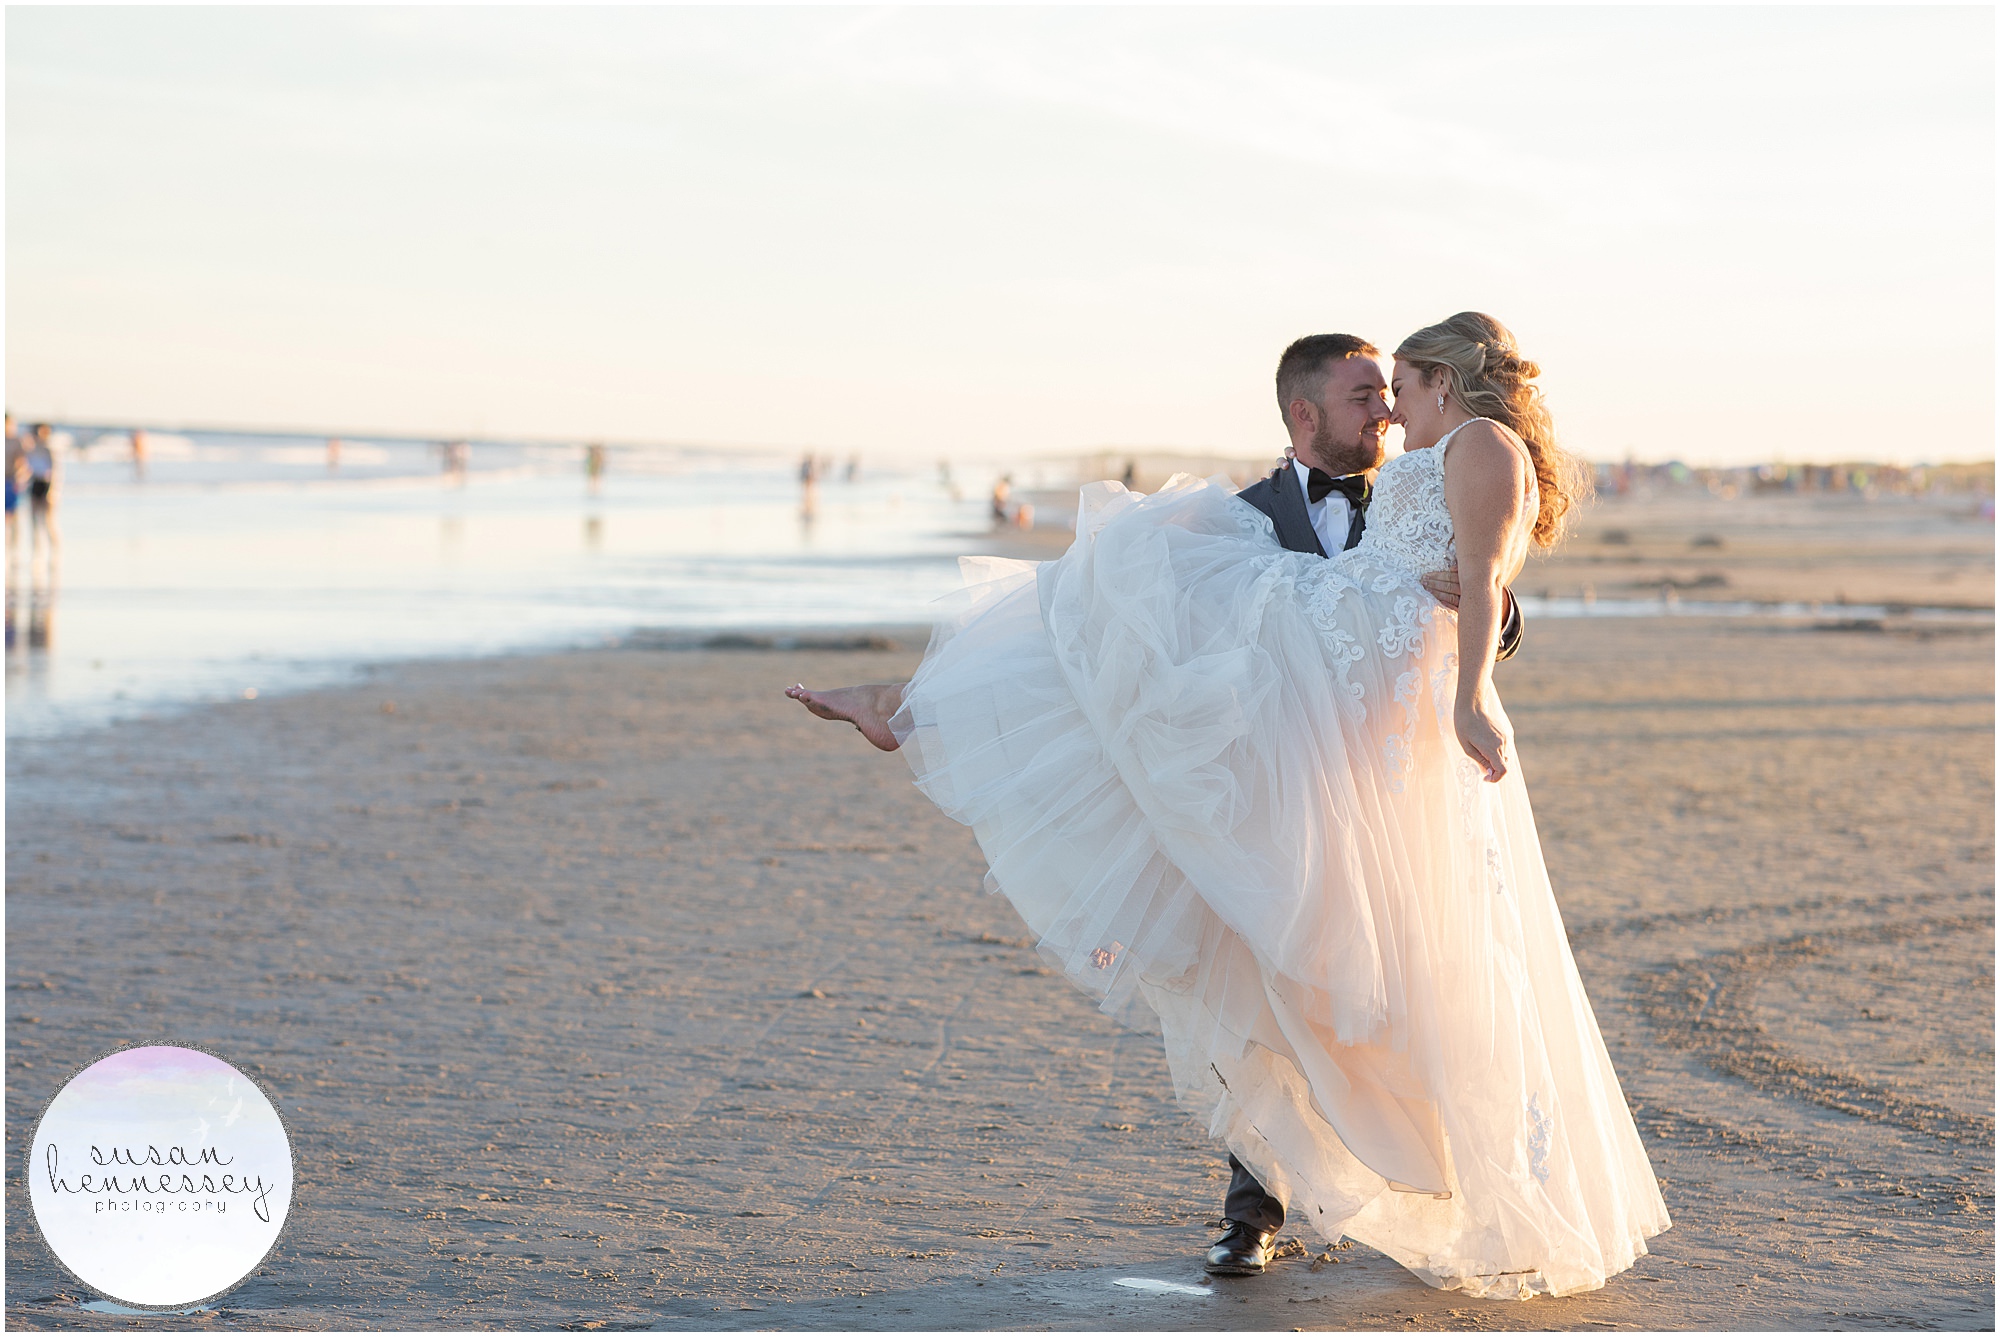 Susan Hennessey Photography Best of 2020 Weddings - Sunset photos at ICONA Diamond Beach wedding